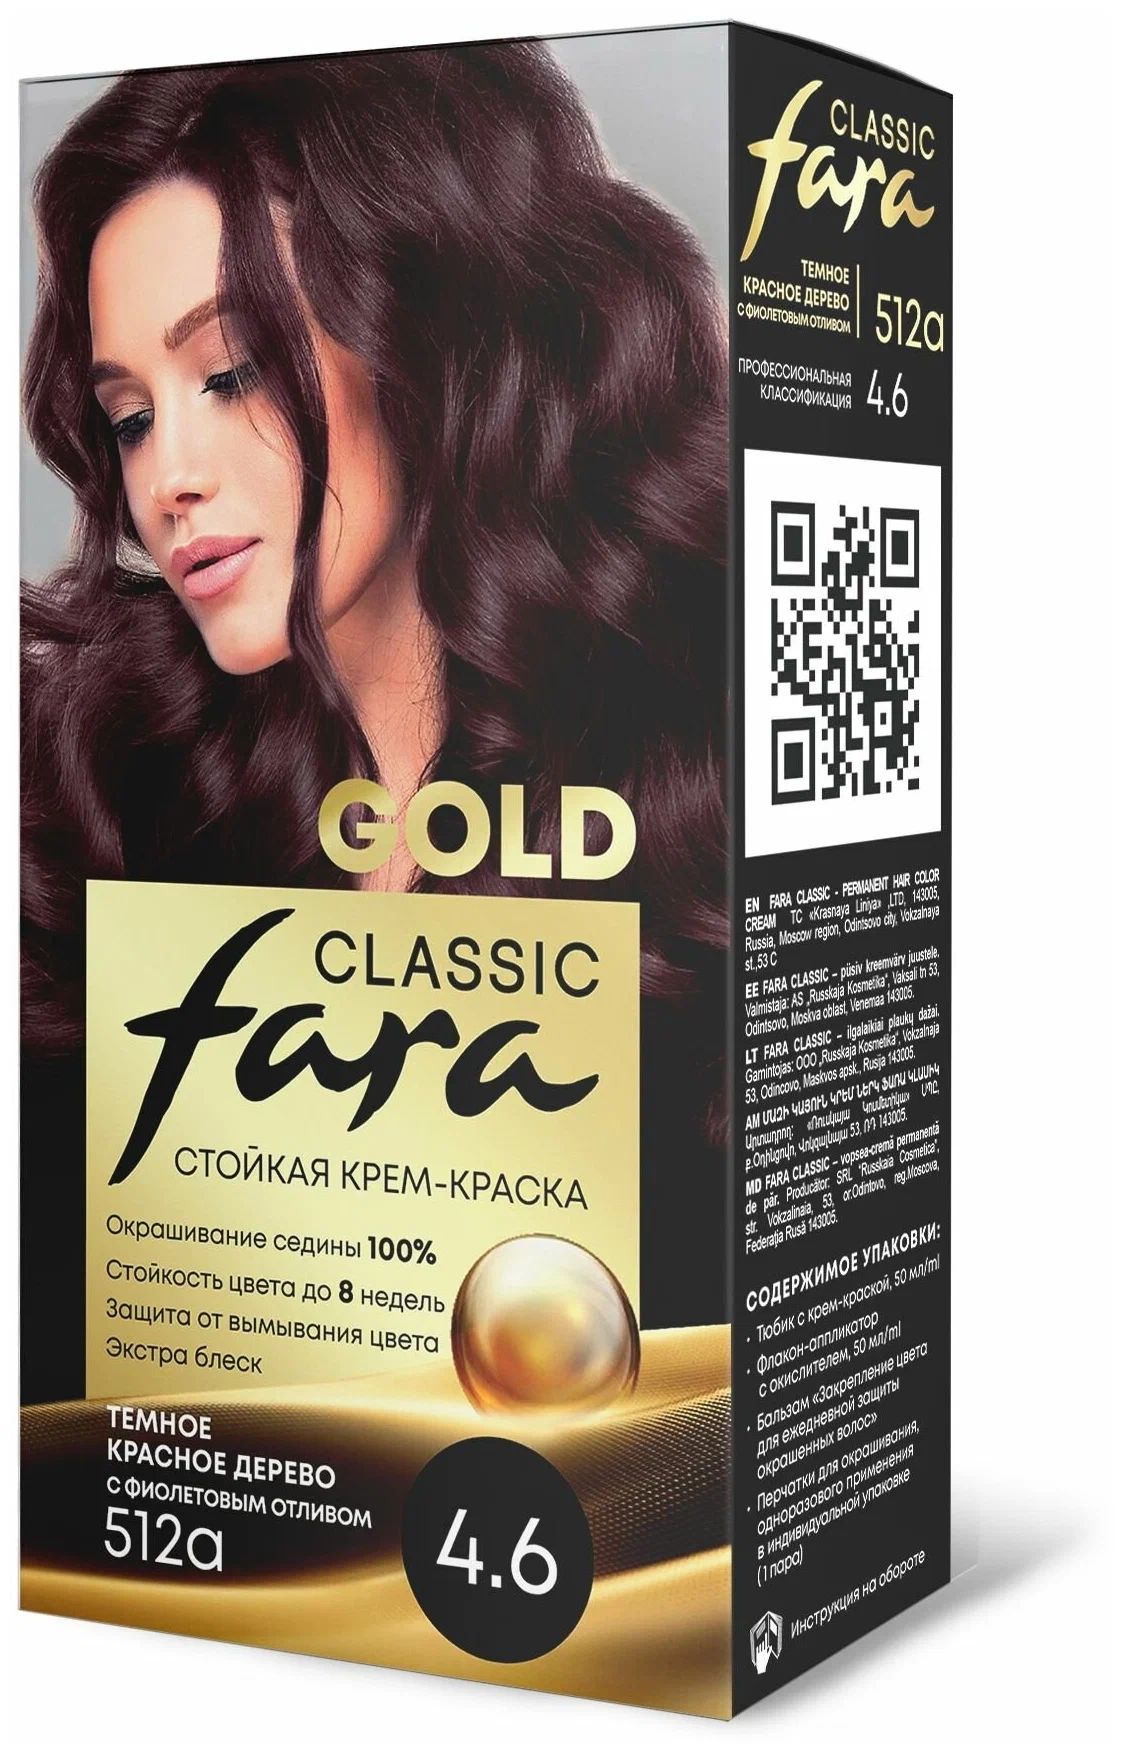 Крем-краска для волос Fara Classic Gold 512А красное дерево 4.6, 140 г jaguar classic gold 40